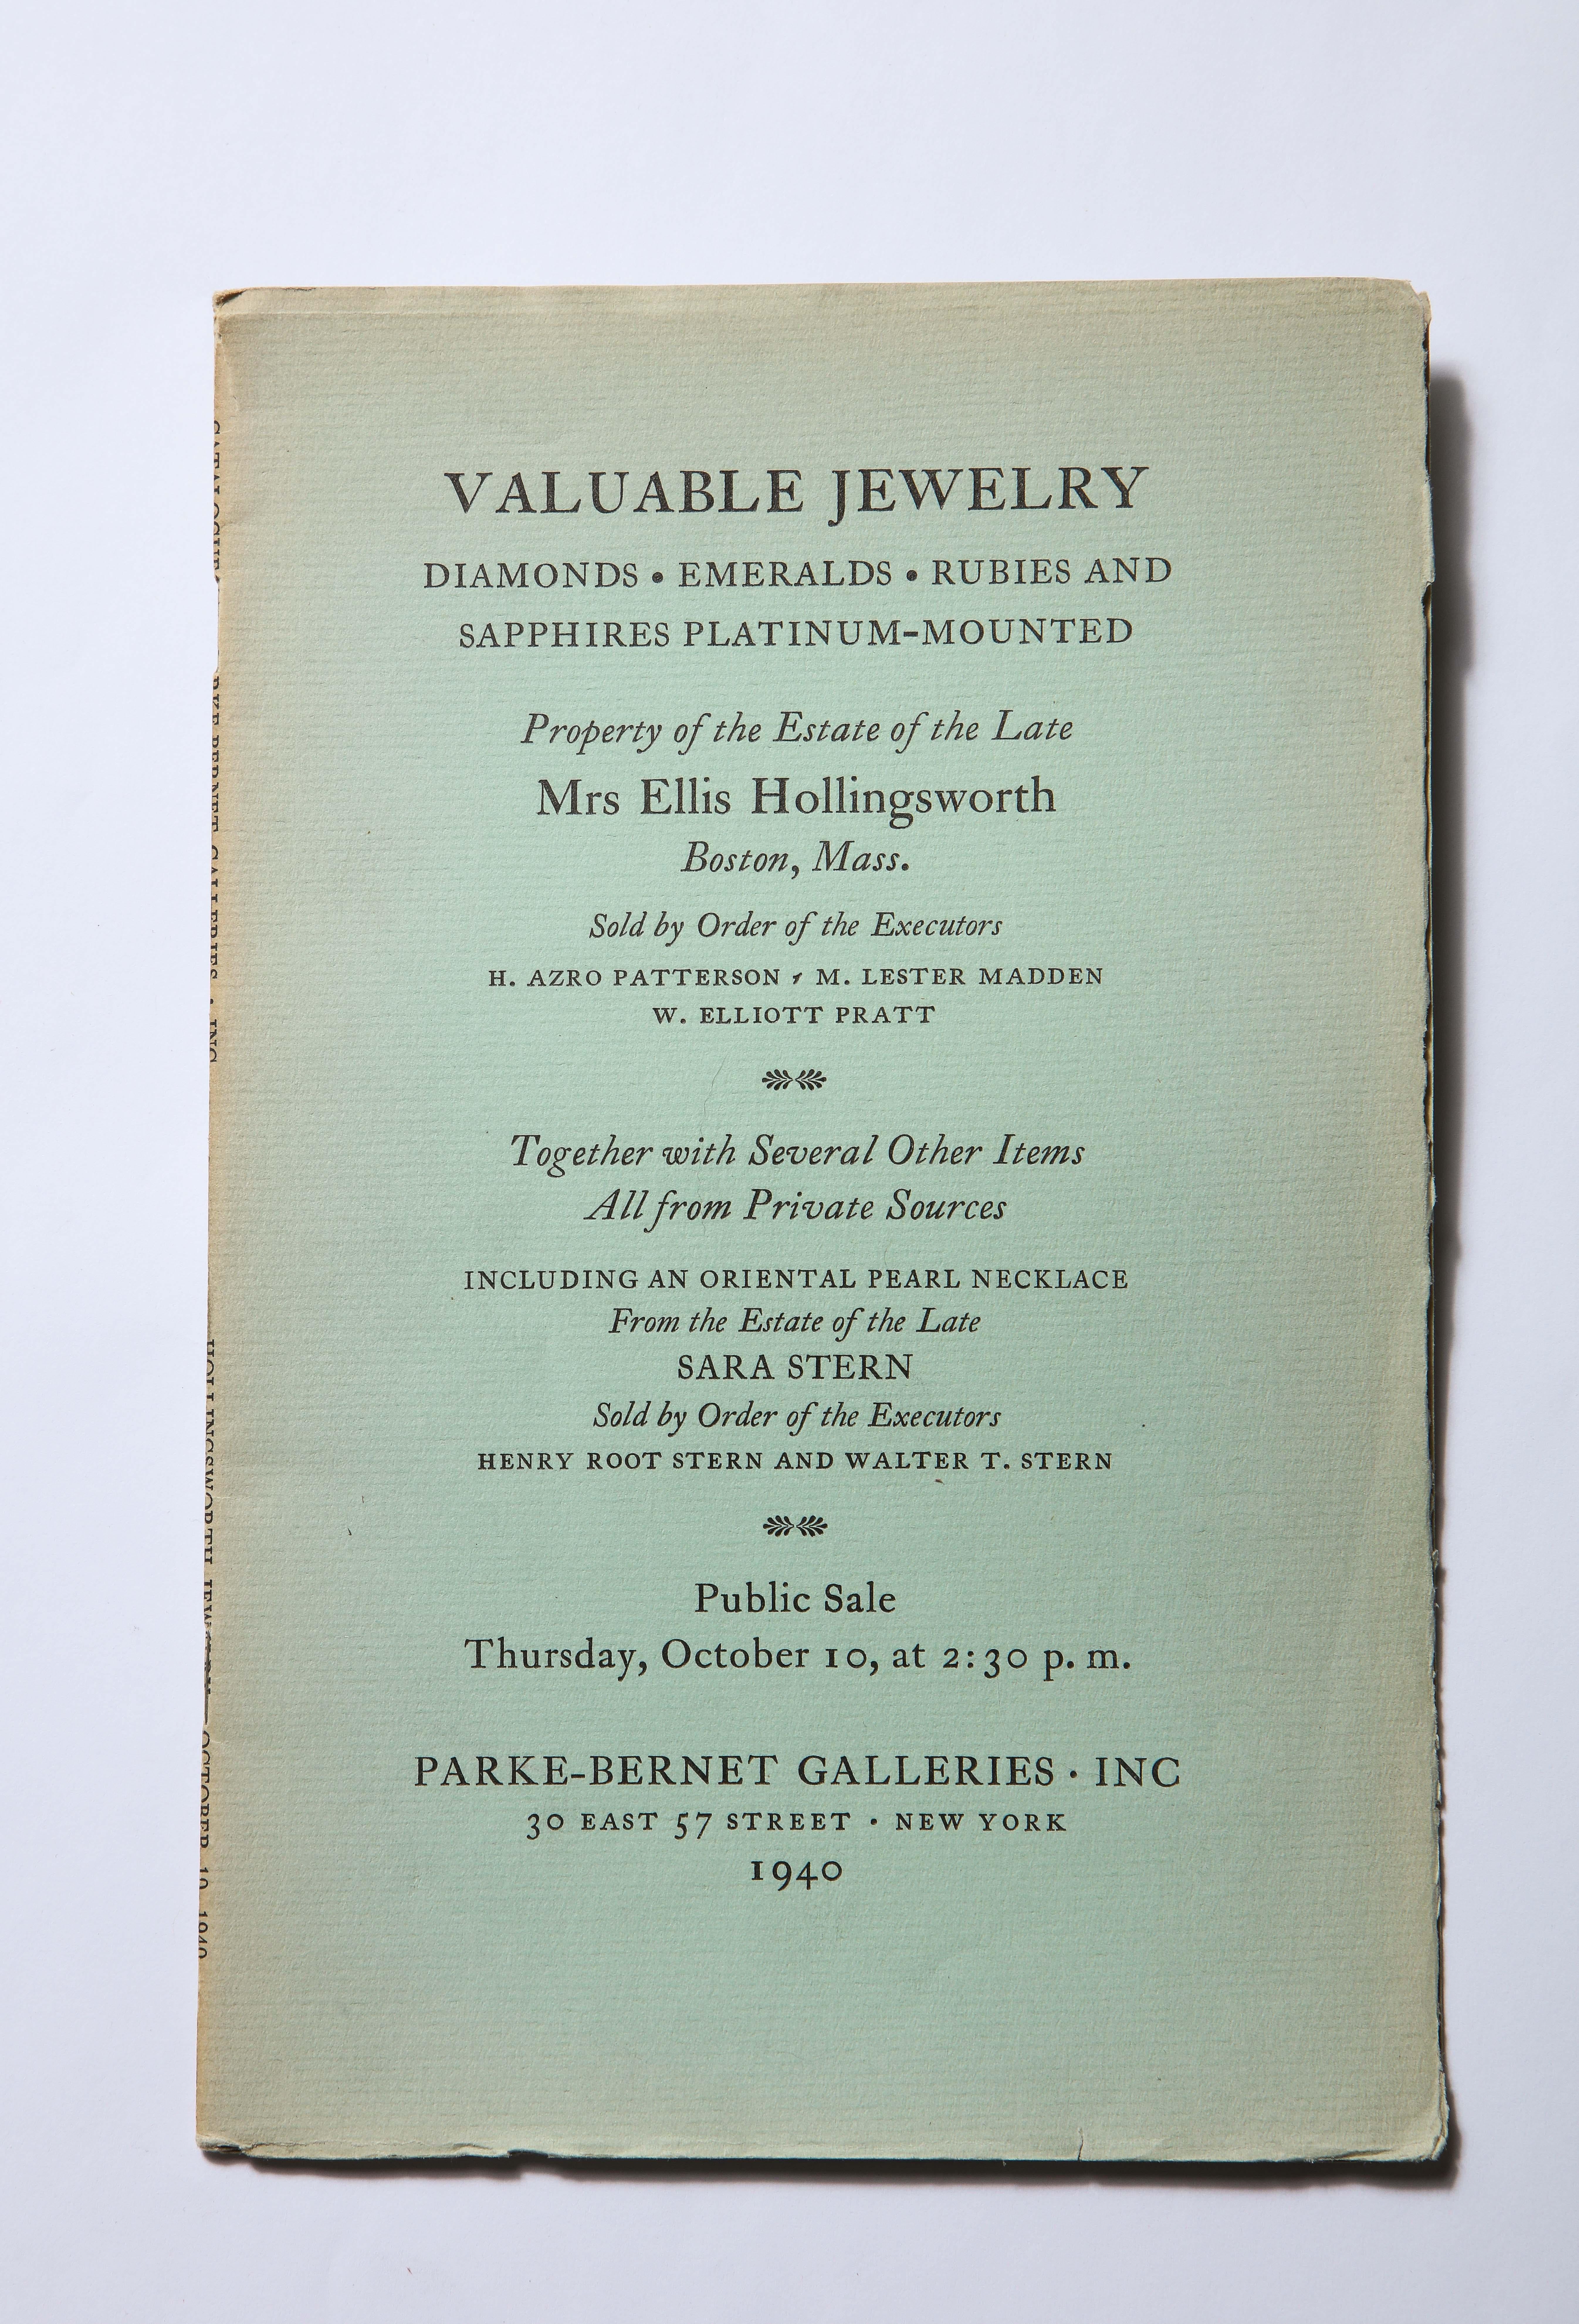 Sammler Vintage Sotheby Important Jewelry Auktionskataloge Cartier Art Deco im Angebot 1